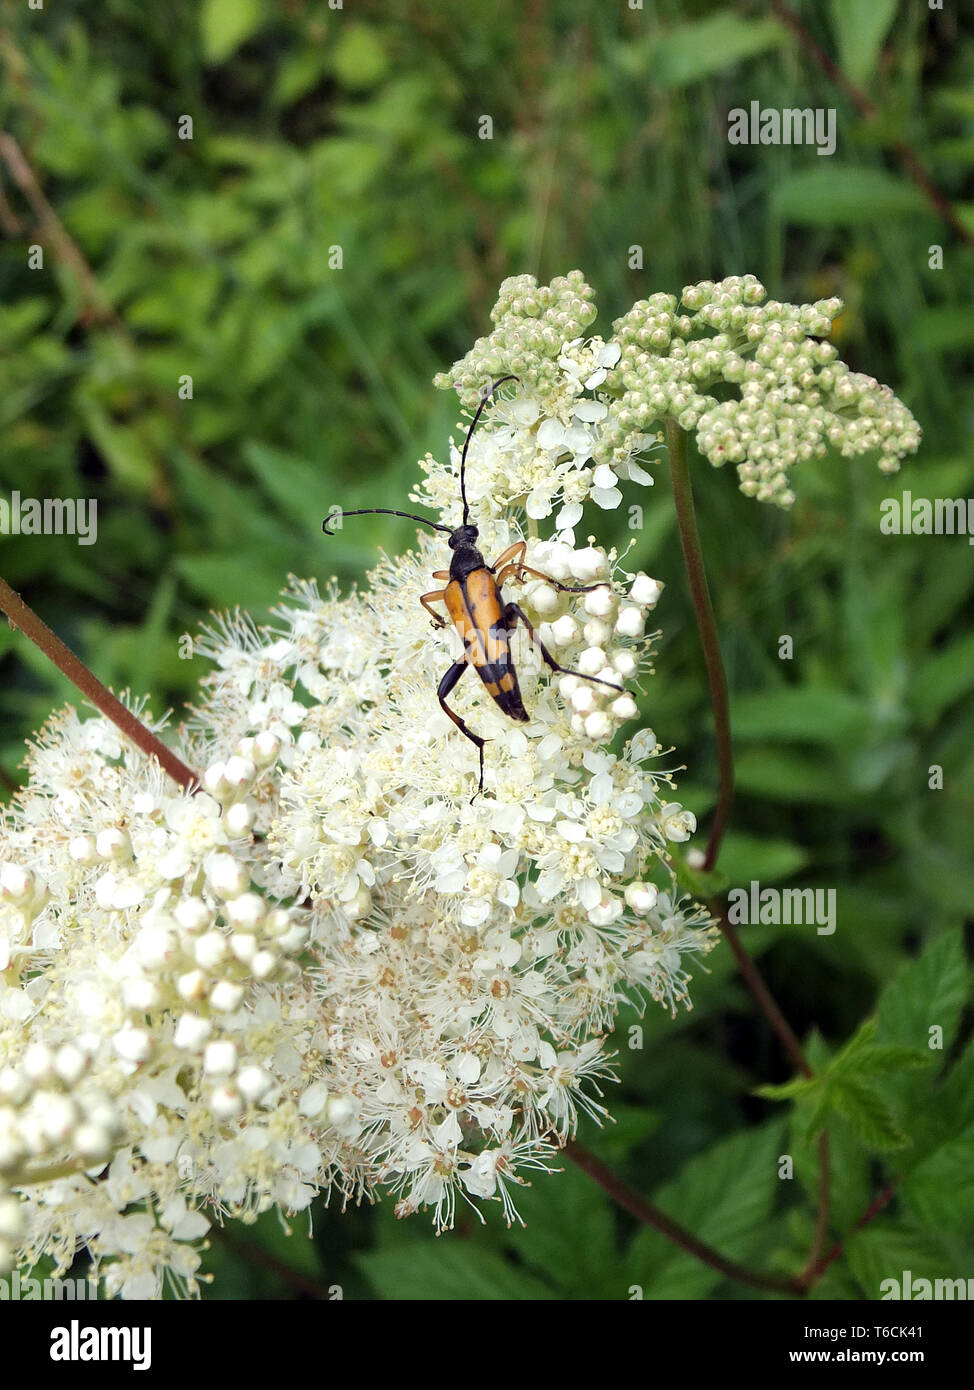 A Longhorn Beetle feeding on the flowers of an Elderberry bush Stock Photo